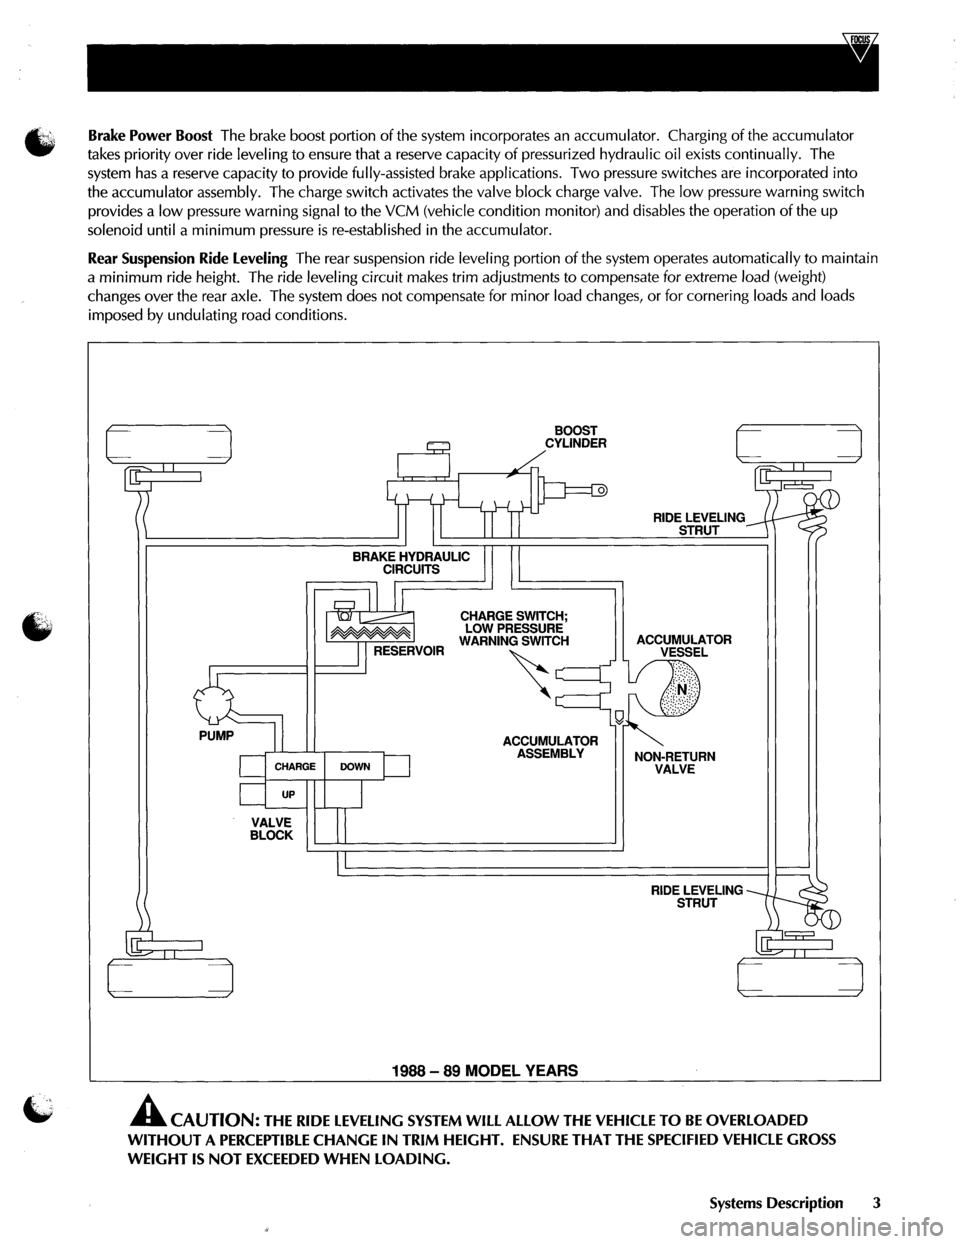 JAGUAR XJ40 1997 2.G Power System Hydraulic Manual 